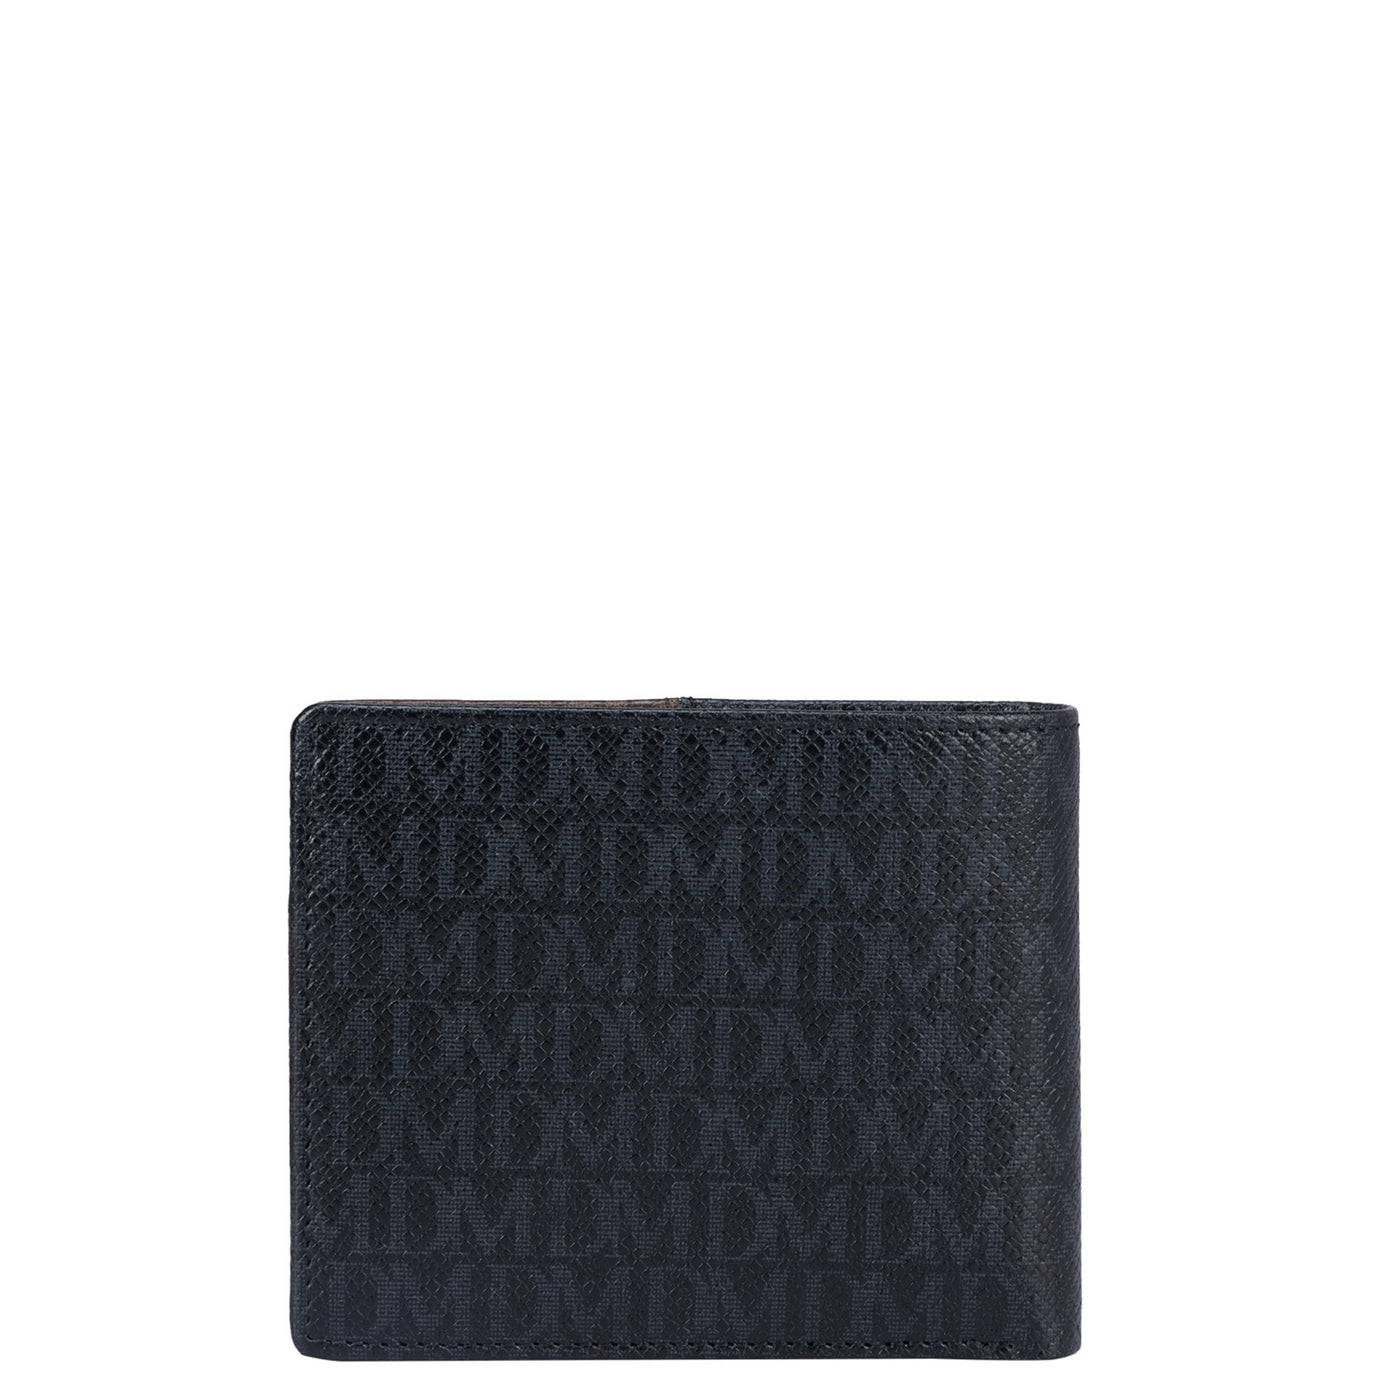 Monogram Leather Mens Wallet - Black & Oak